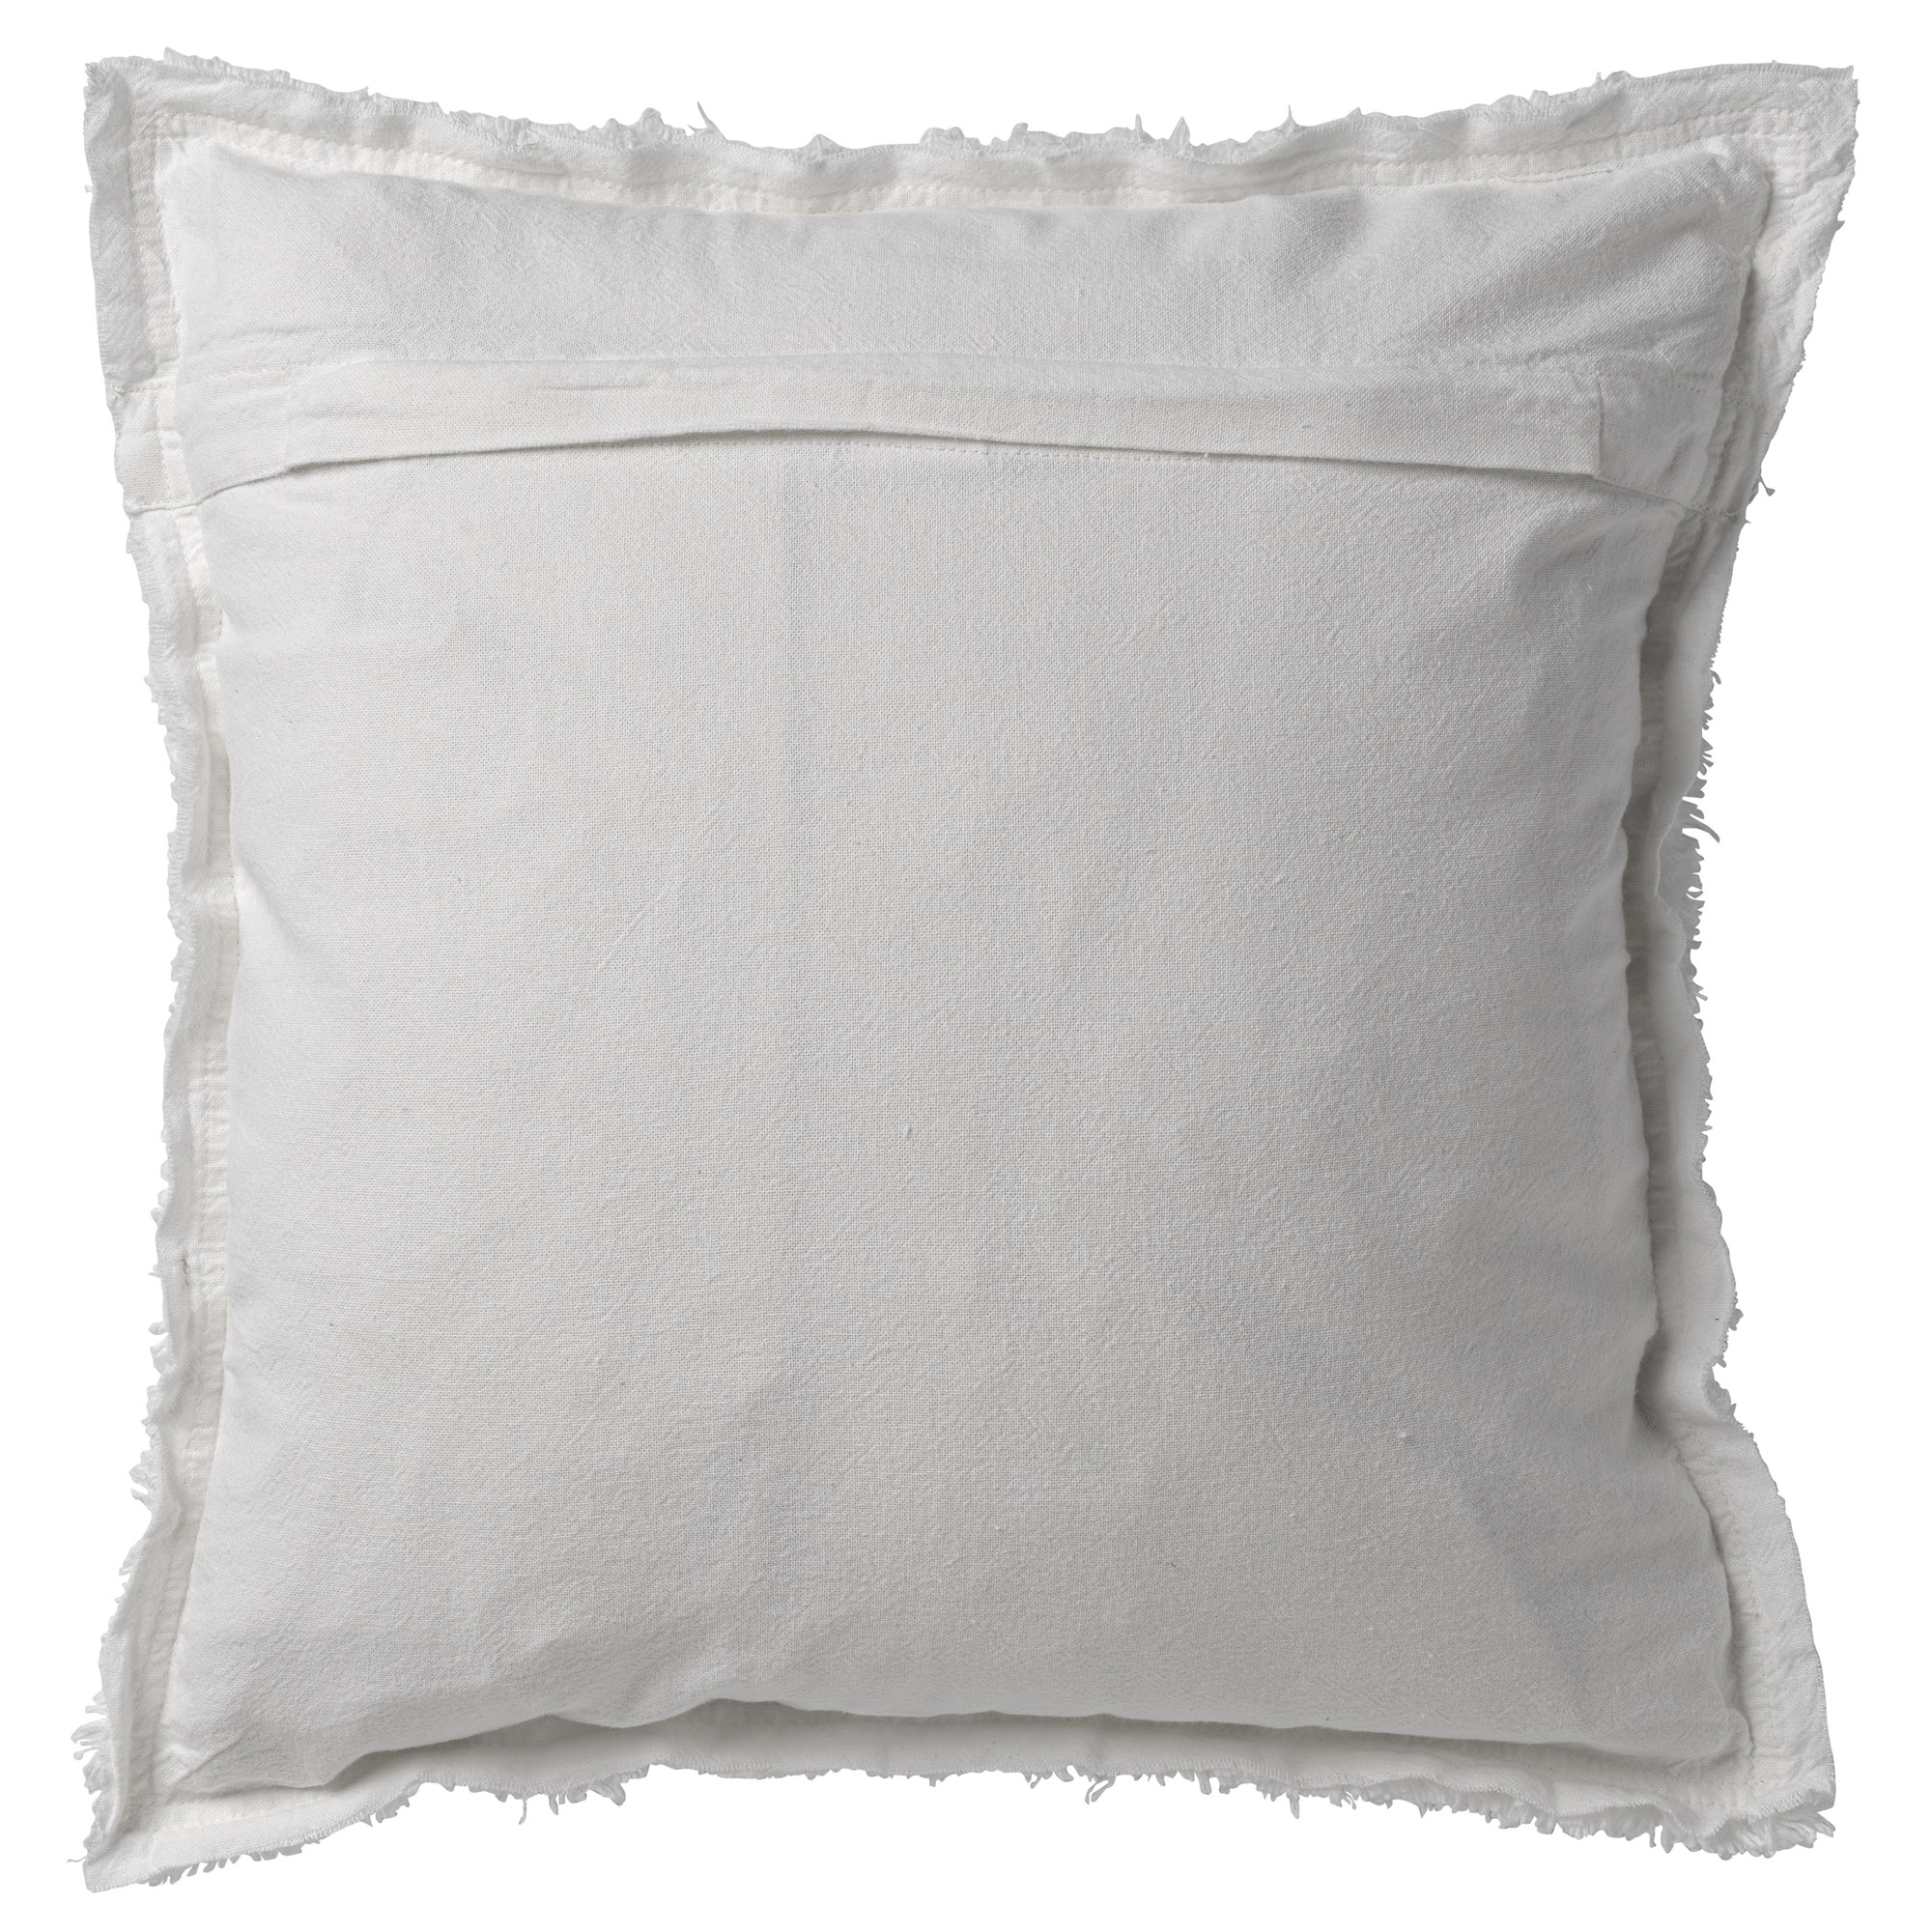 White Baumwolle 60x60 stone-washed | cm | BURTO Kissenbezug - mit Kissenhülle DDL02121000126 Snow optik